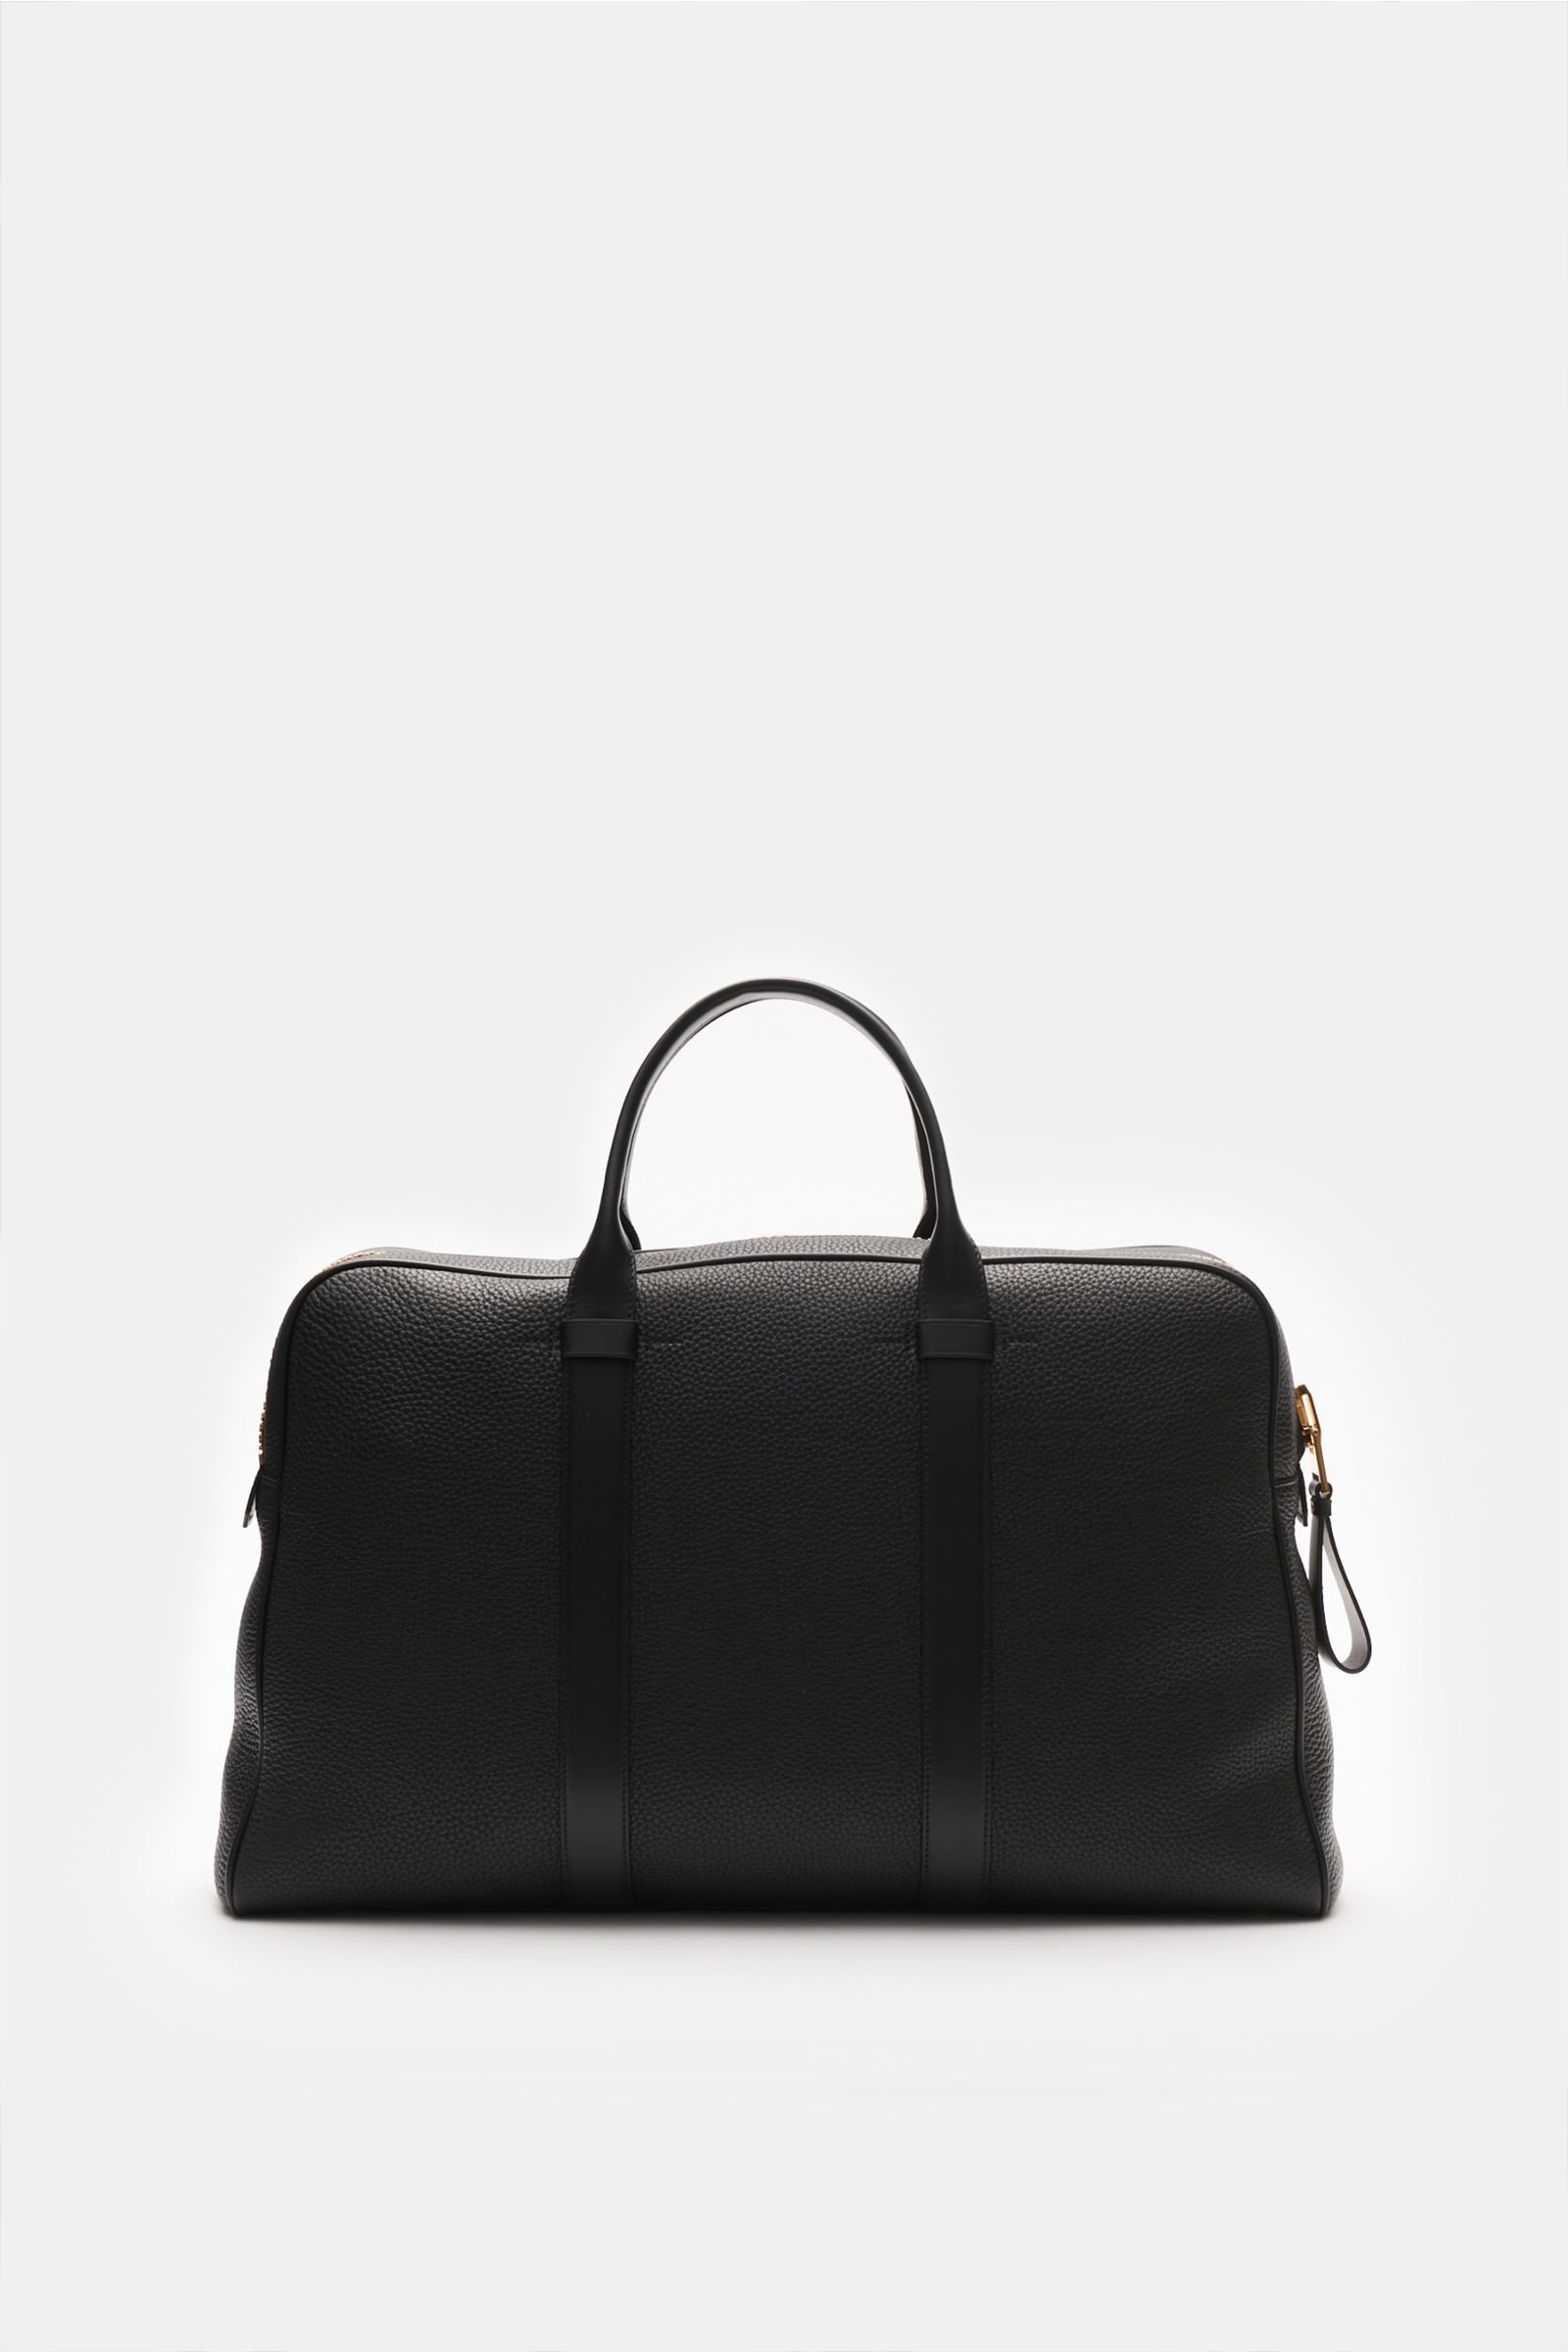 TOM FORD briefcase black | BRAUN Hamburg